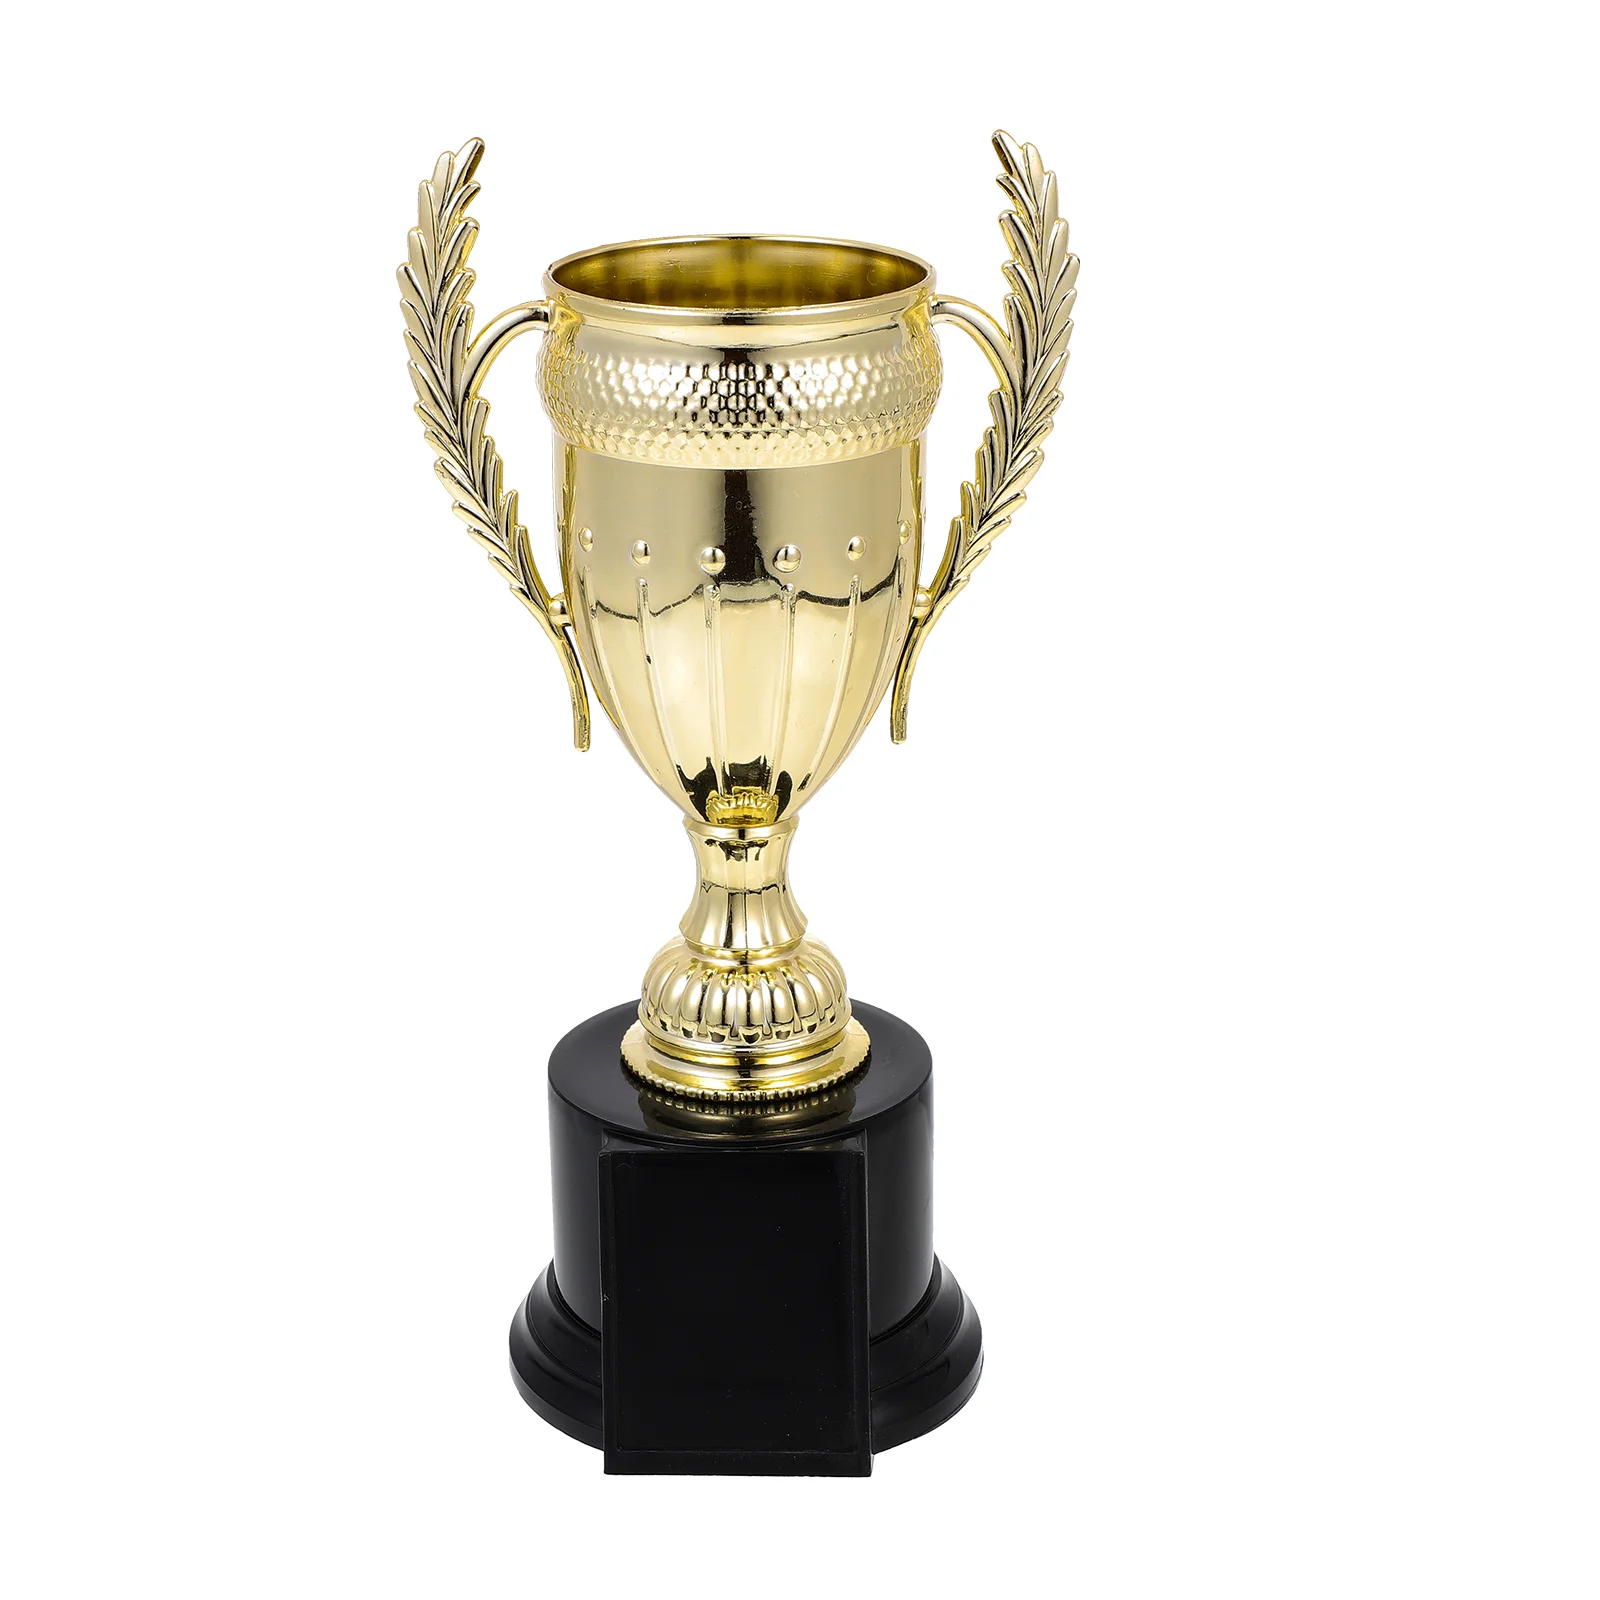 Mina trophy